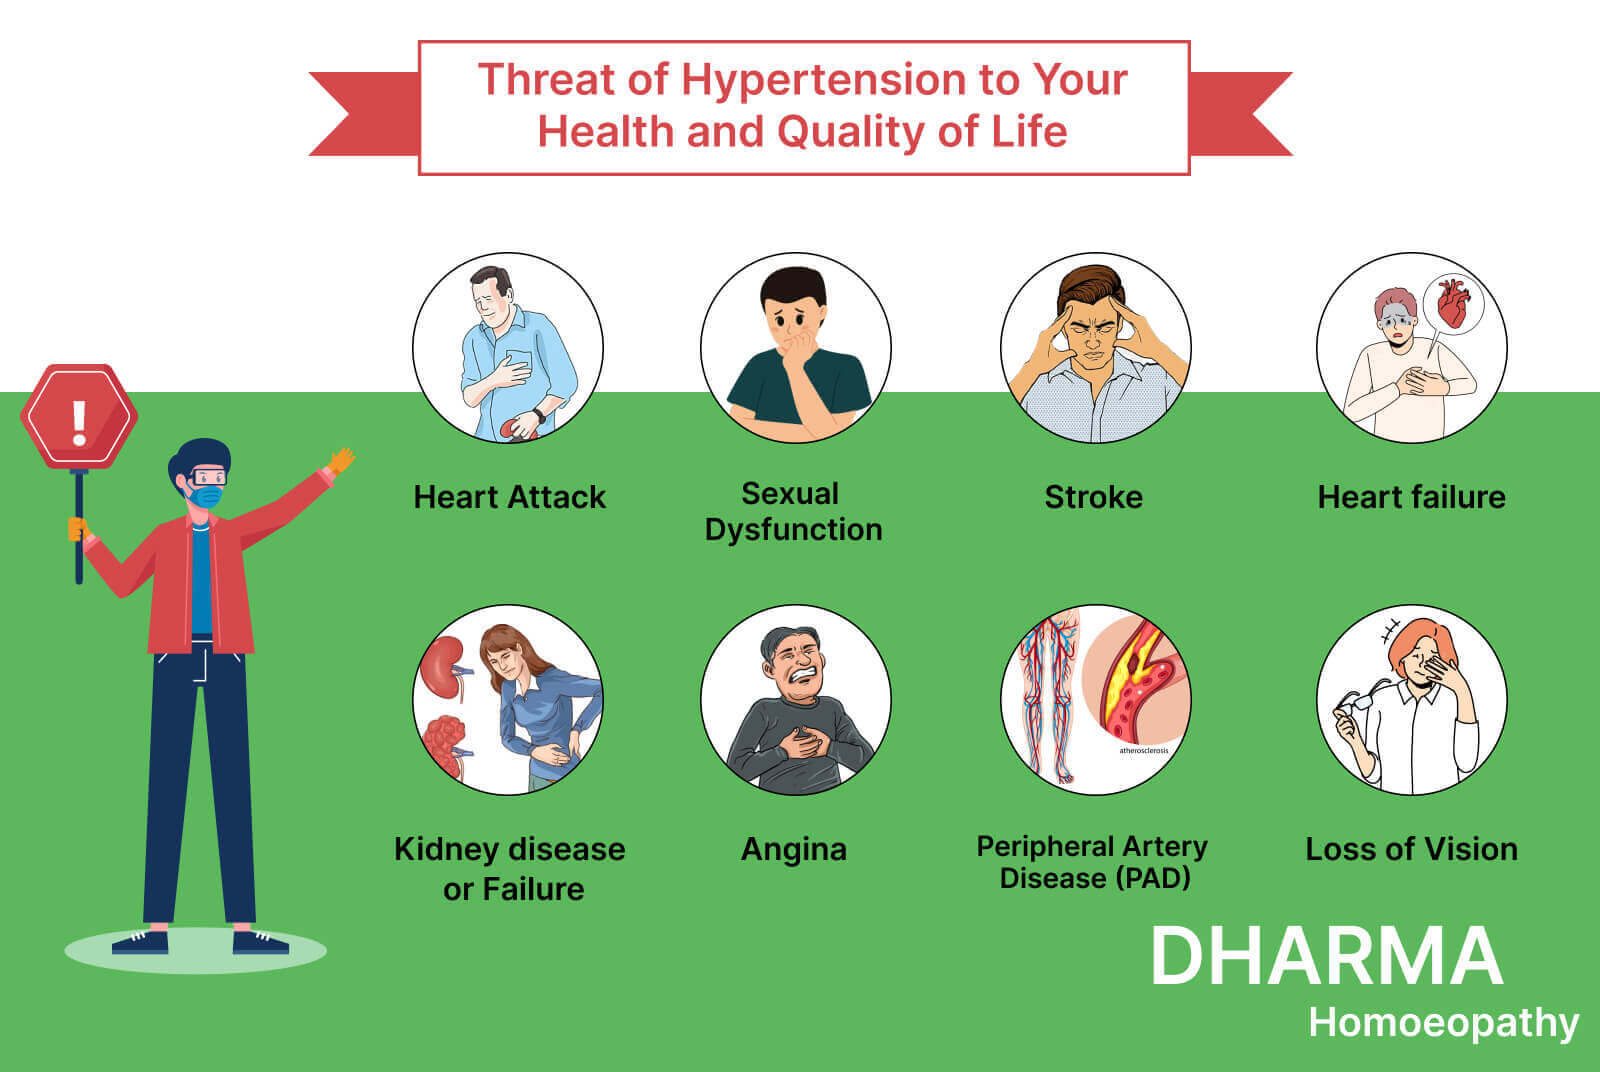 Threats of Hypertension